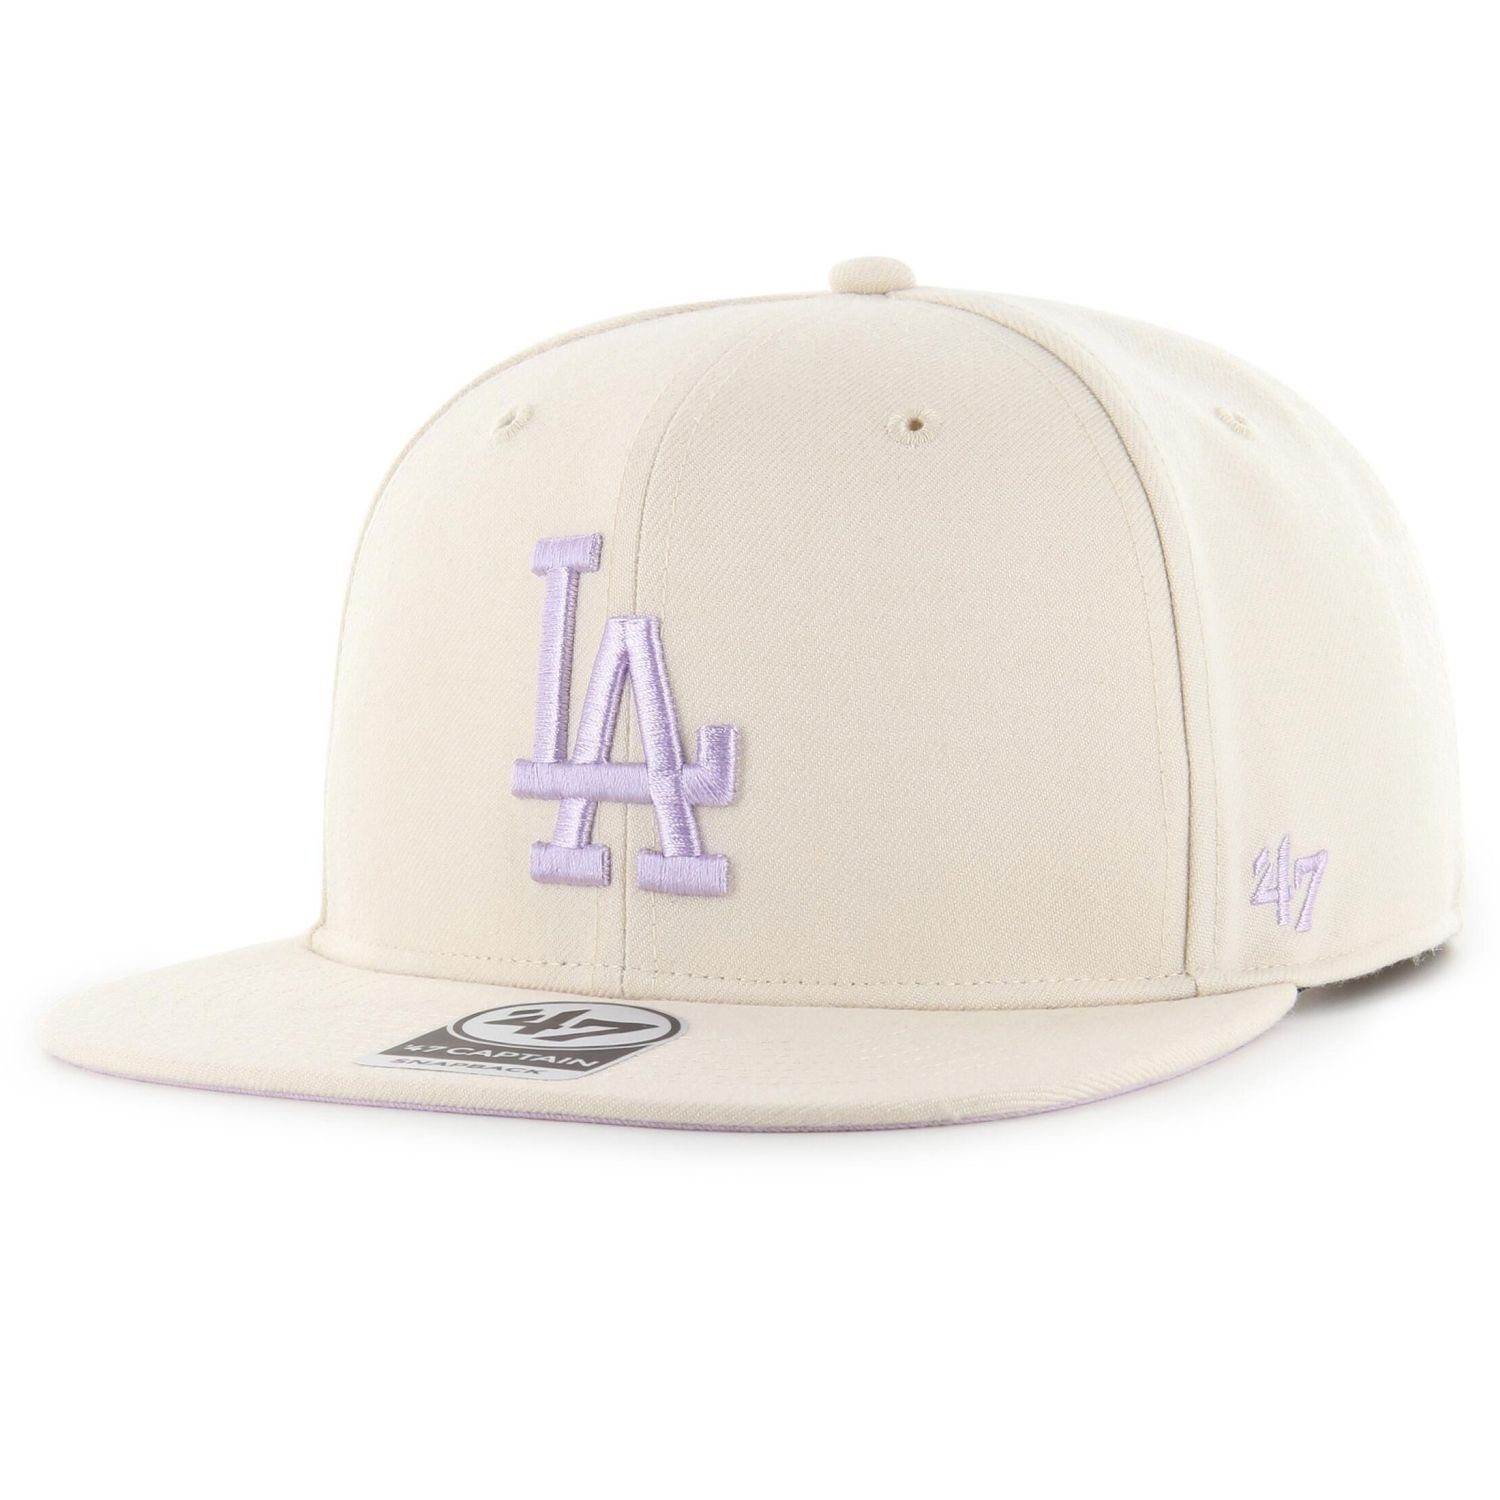 Dodgers WORLD Los Cap Brand '47 Angeles SERIES Snapback